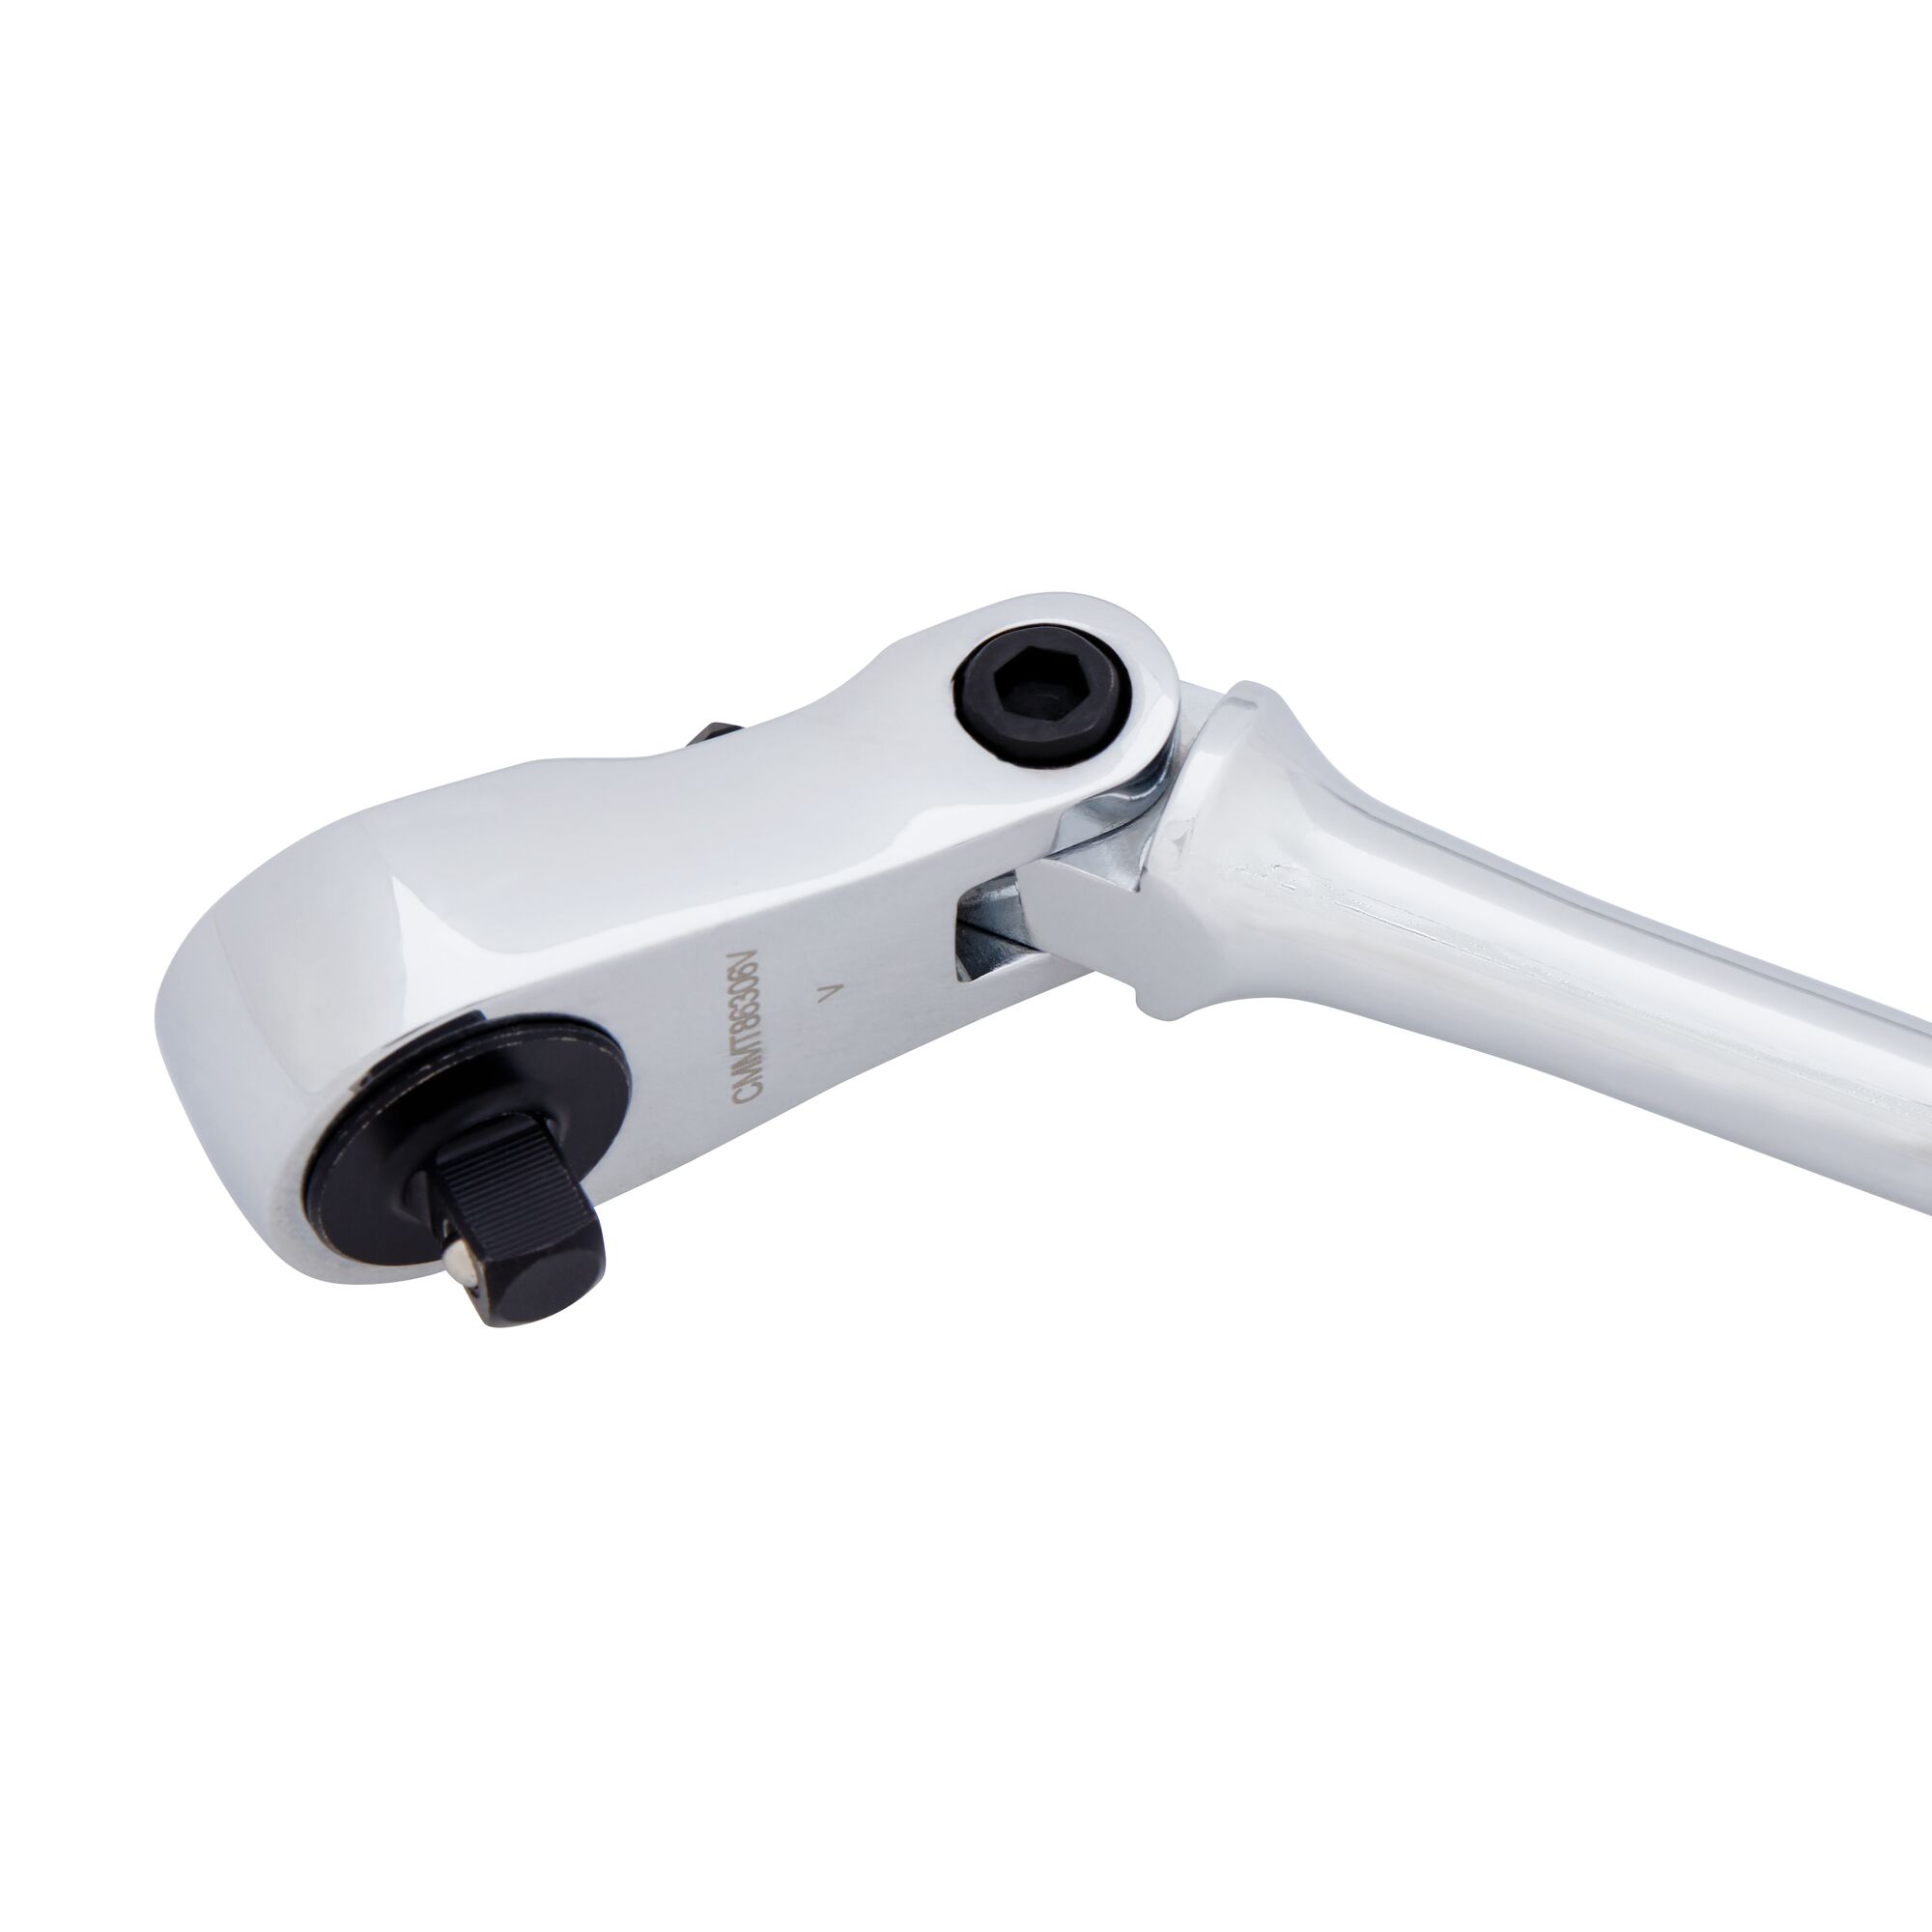 180 degrees articulating head feature in V series quarter inch drive comfort grip long flex head ratchet.